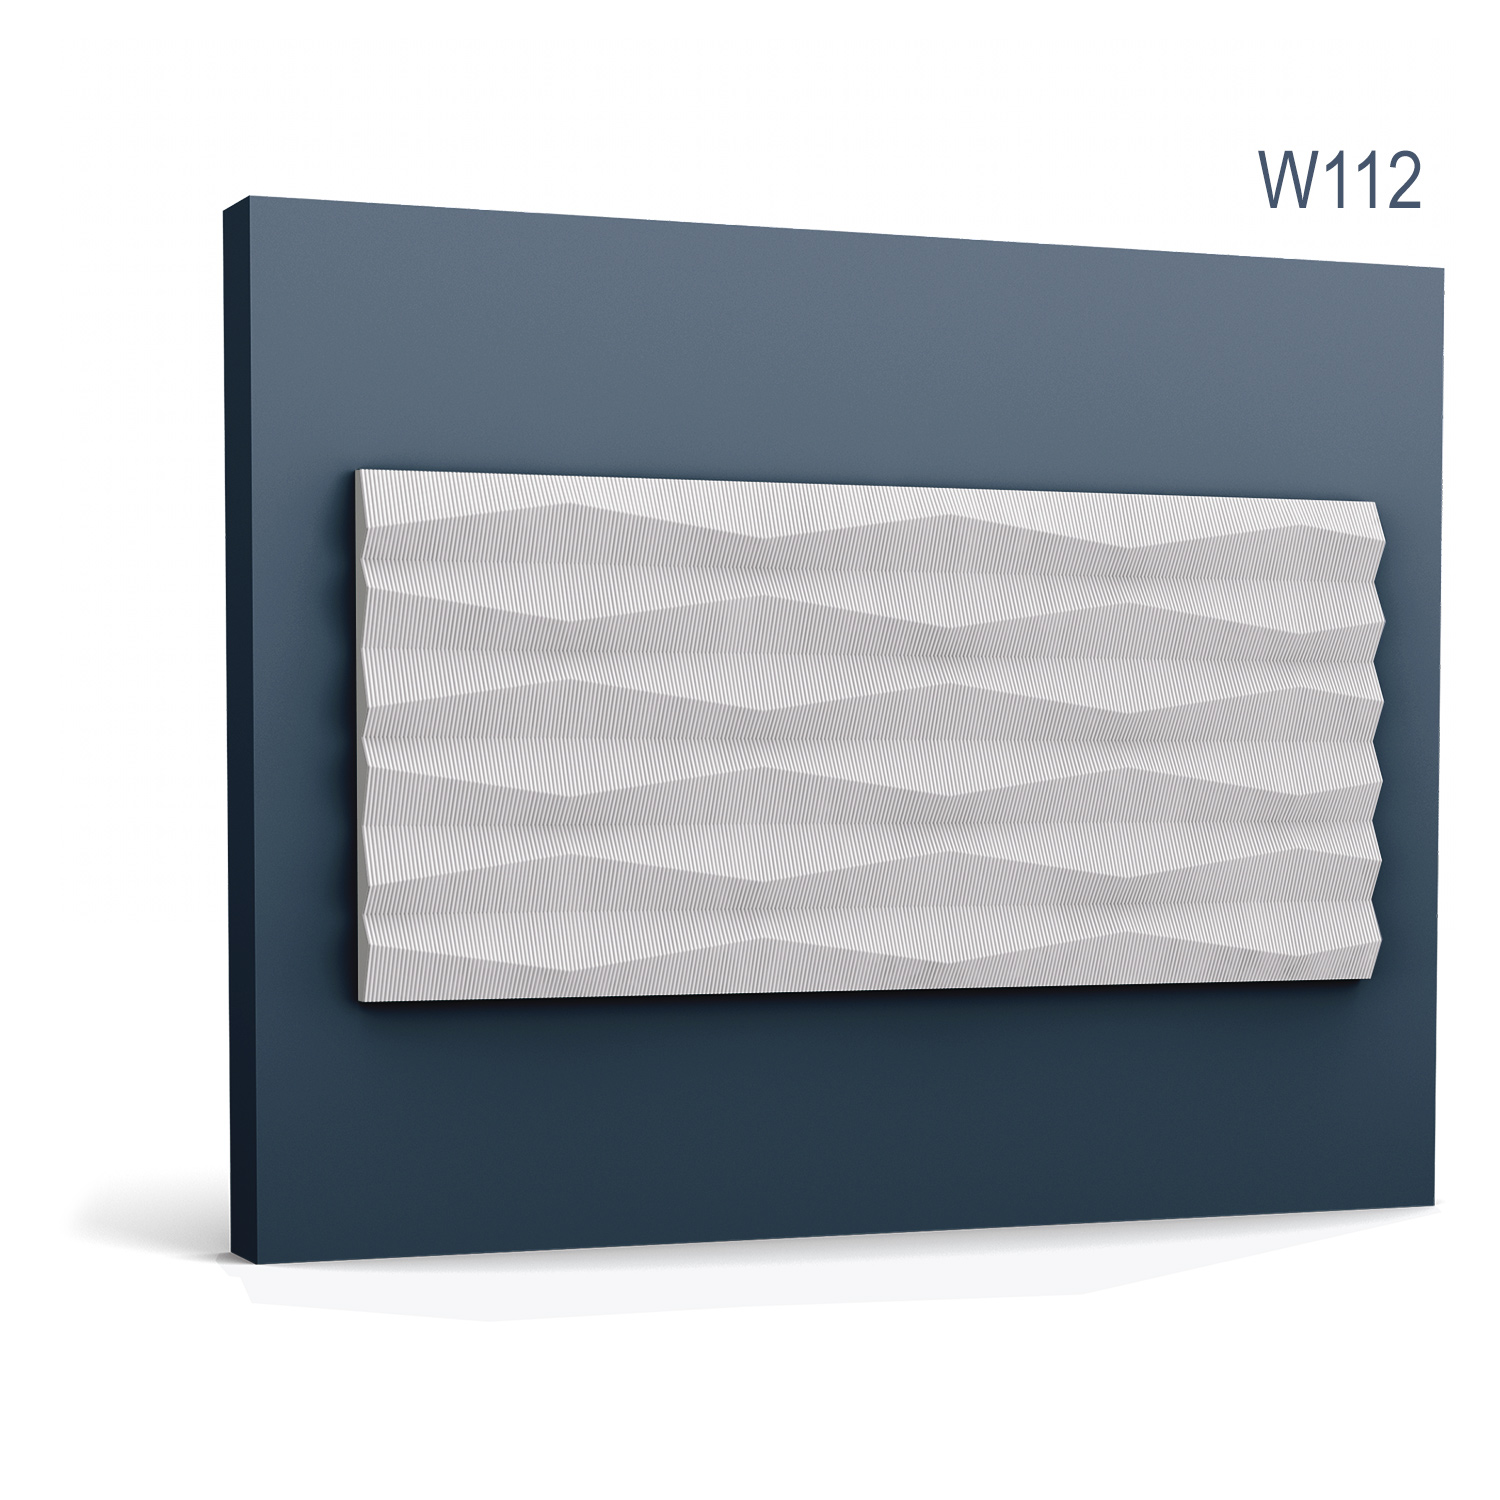 Panou 3D decorativ W112 RIDGE pentru perete / tavan, stil modern, rigid, ornamental, Belgia, vopsibil, din poliuretan de inalta densitate, L 200 x H 25 x L 1,9 cm